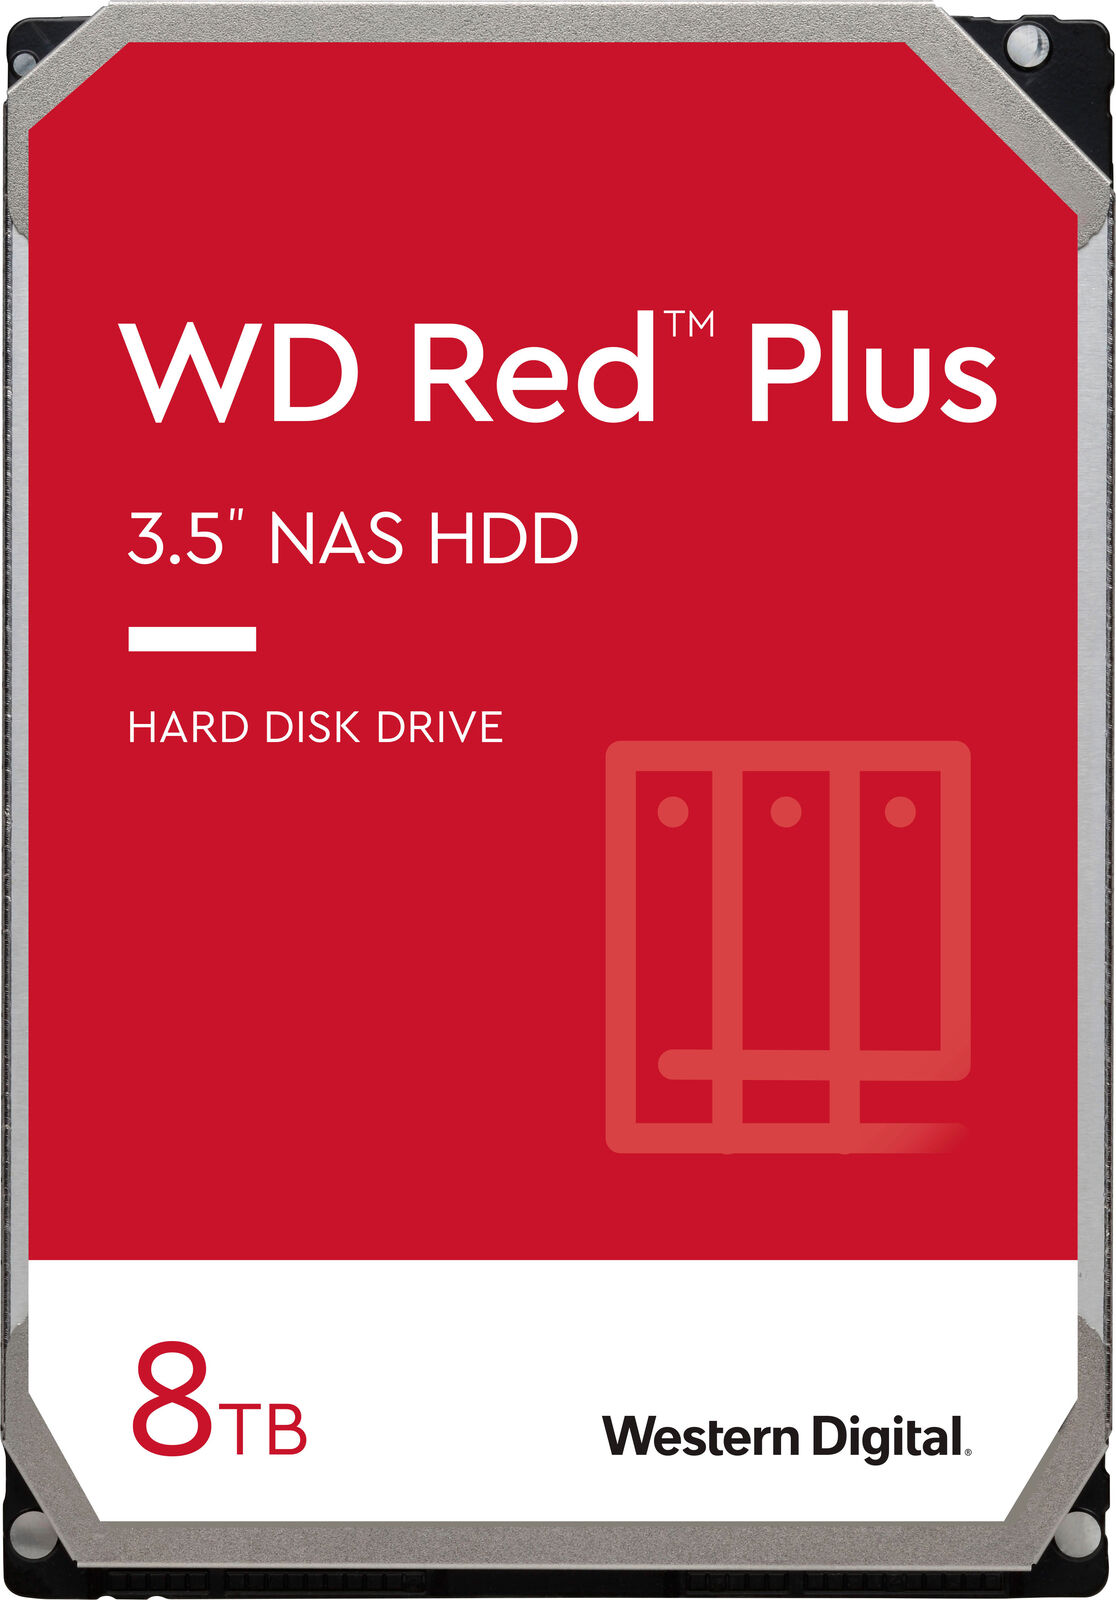 WD Red Plus 8TB Internal SATA NAS Hard Drive For Desktops